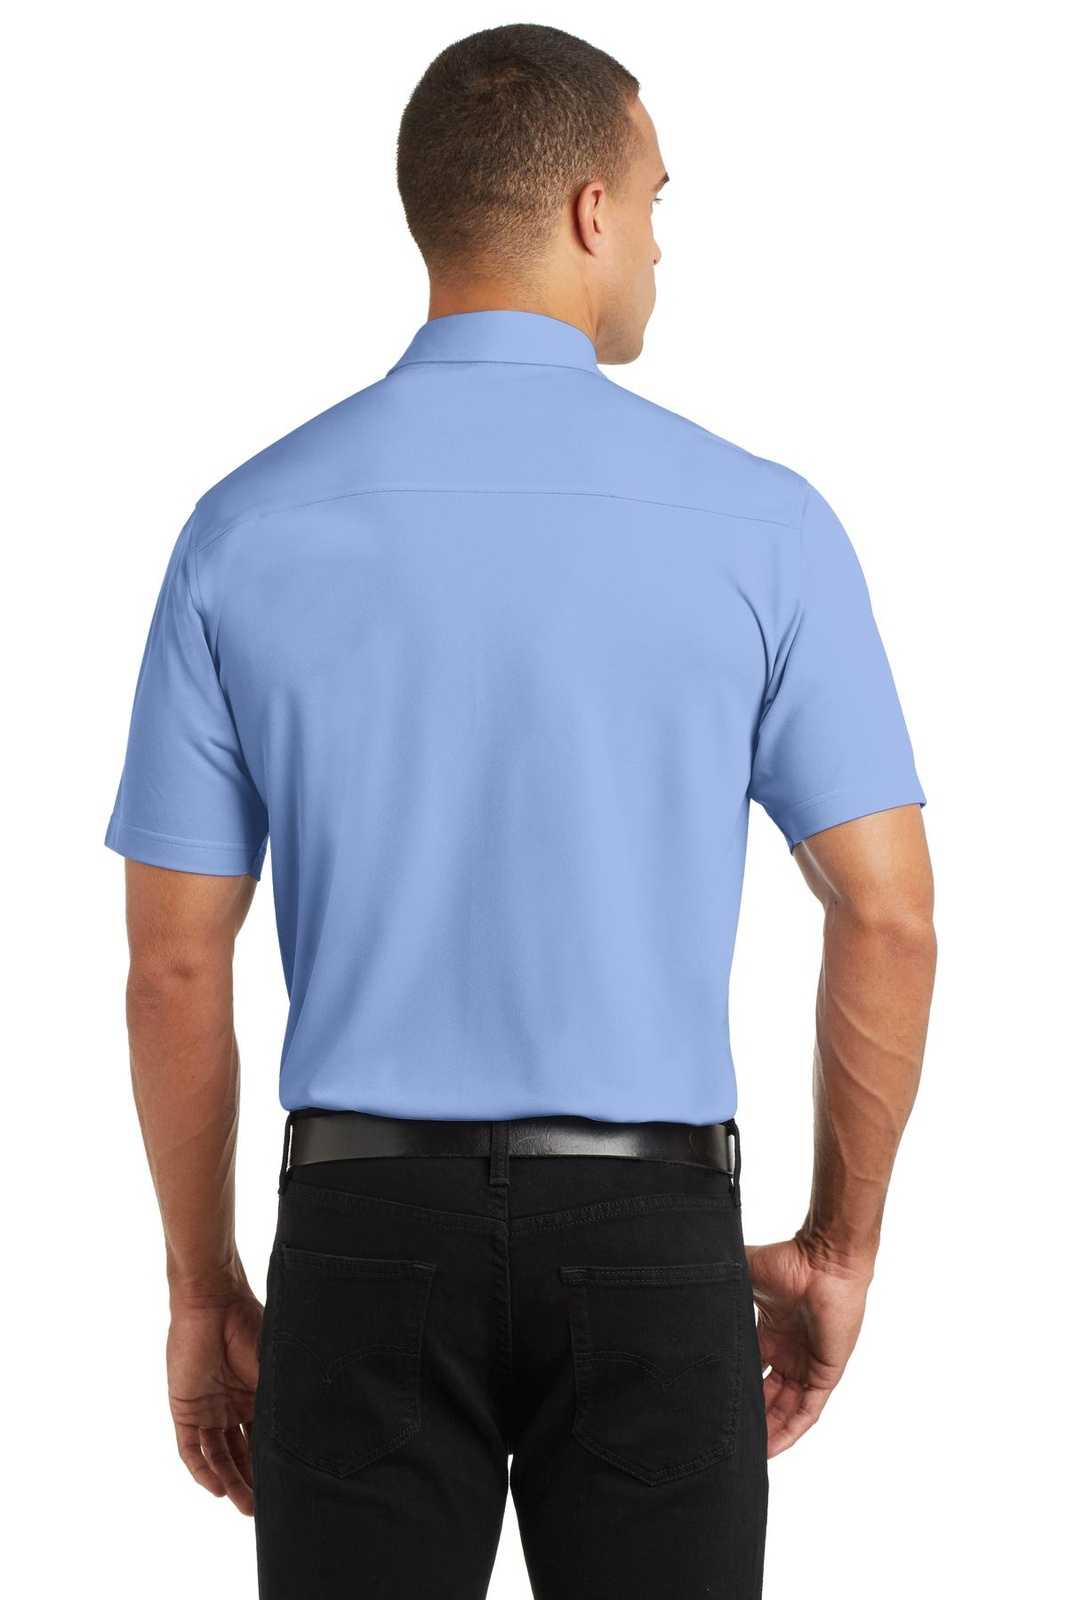 Port Authority K571 Dimension Polo - Dress Shirt Blue - HIT a Double - 1